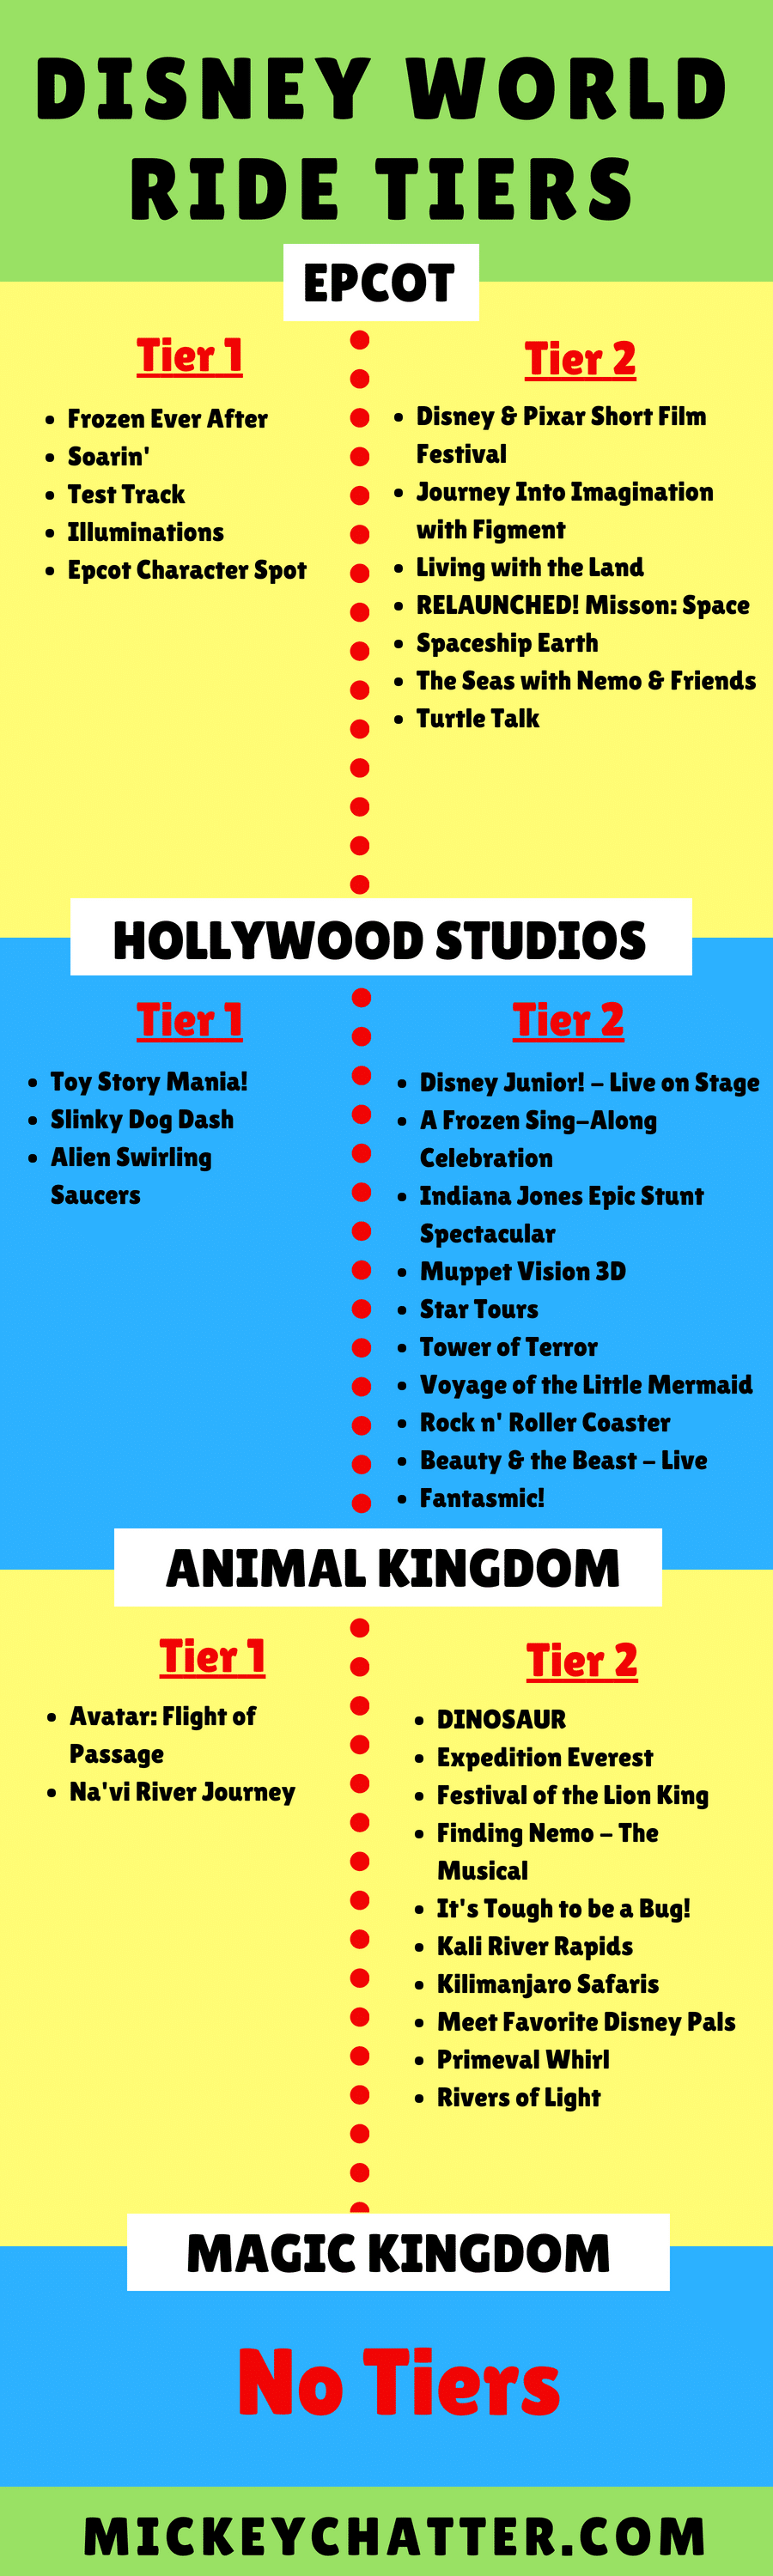 Animal Kingdom Rides List / Walt Disney World - Disney's Animal Kingdom